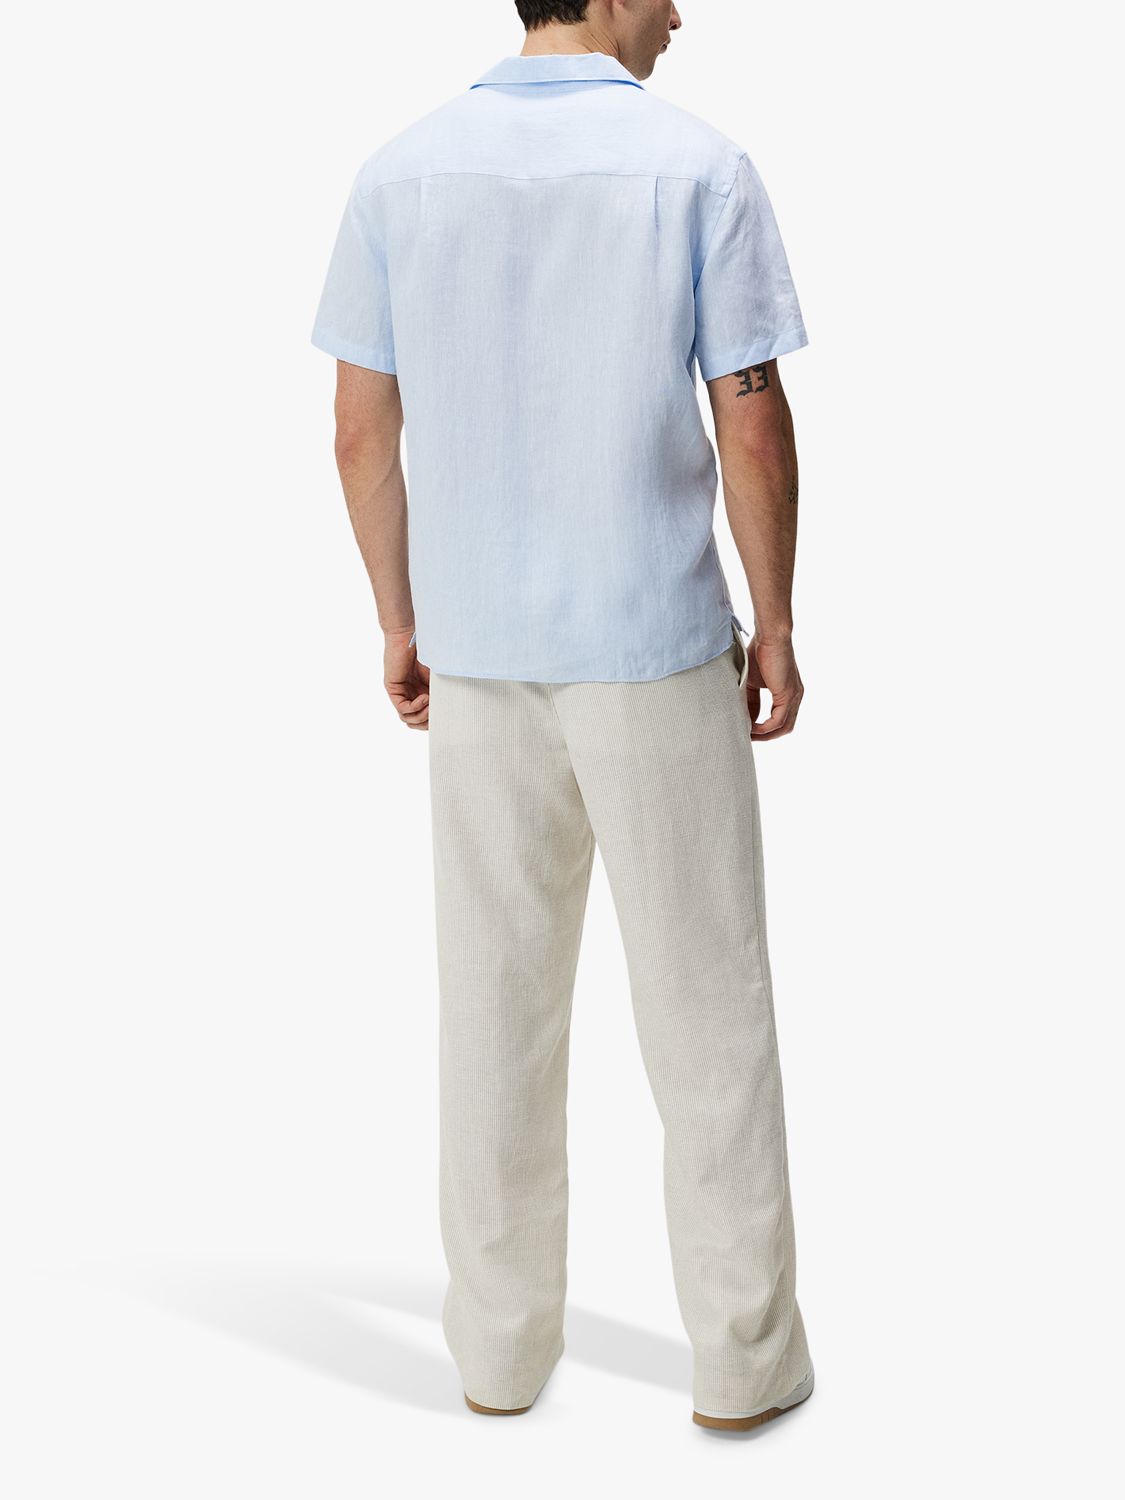 J.Lindeberg Elio Linen Melange Short Sleeve Shirt, Chambray Blue, L